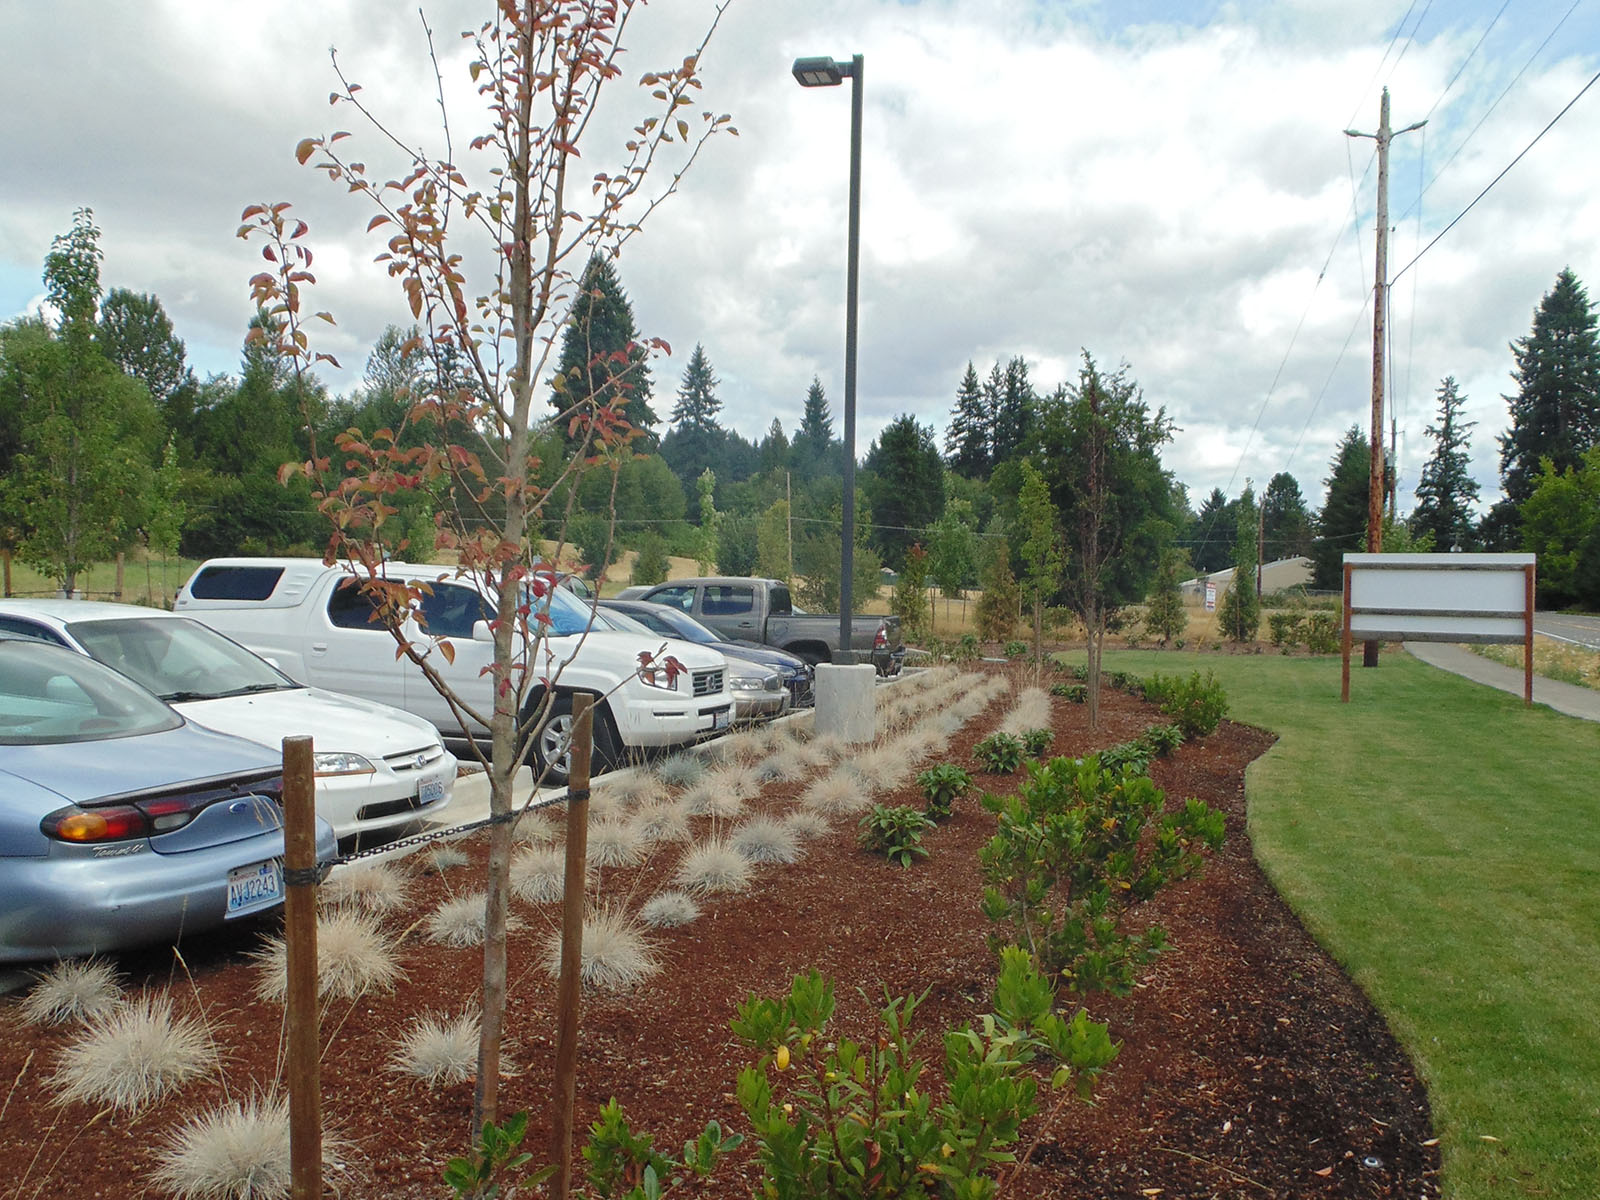 Bonaventure, Salmon Creek, retirement community, Vancouver, Clark County, parking lot design, landscaping